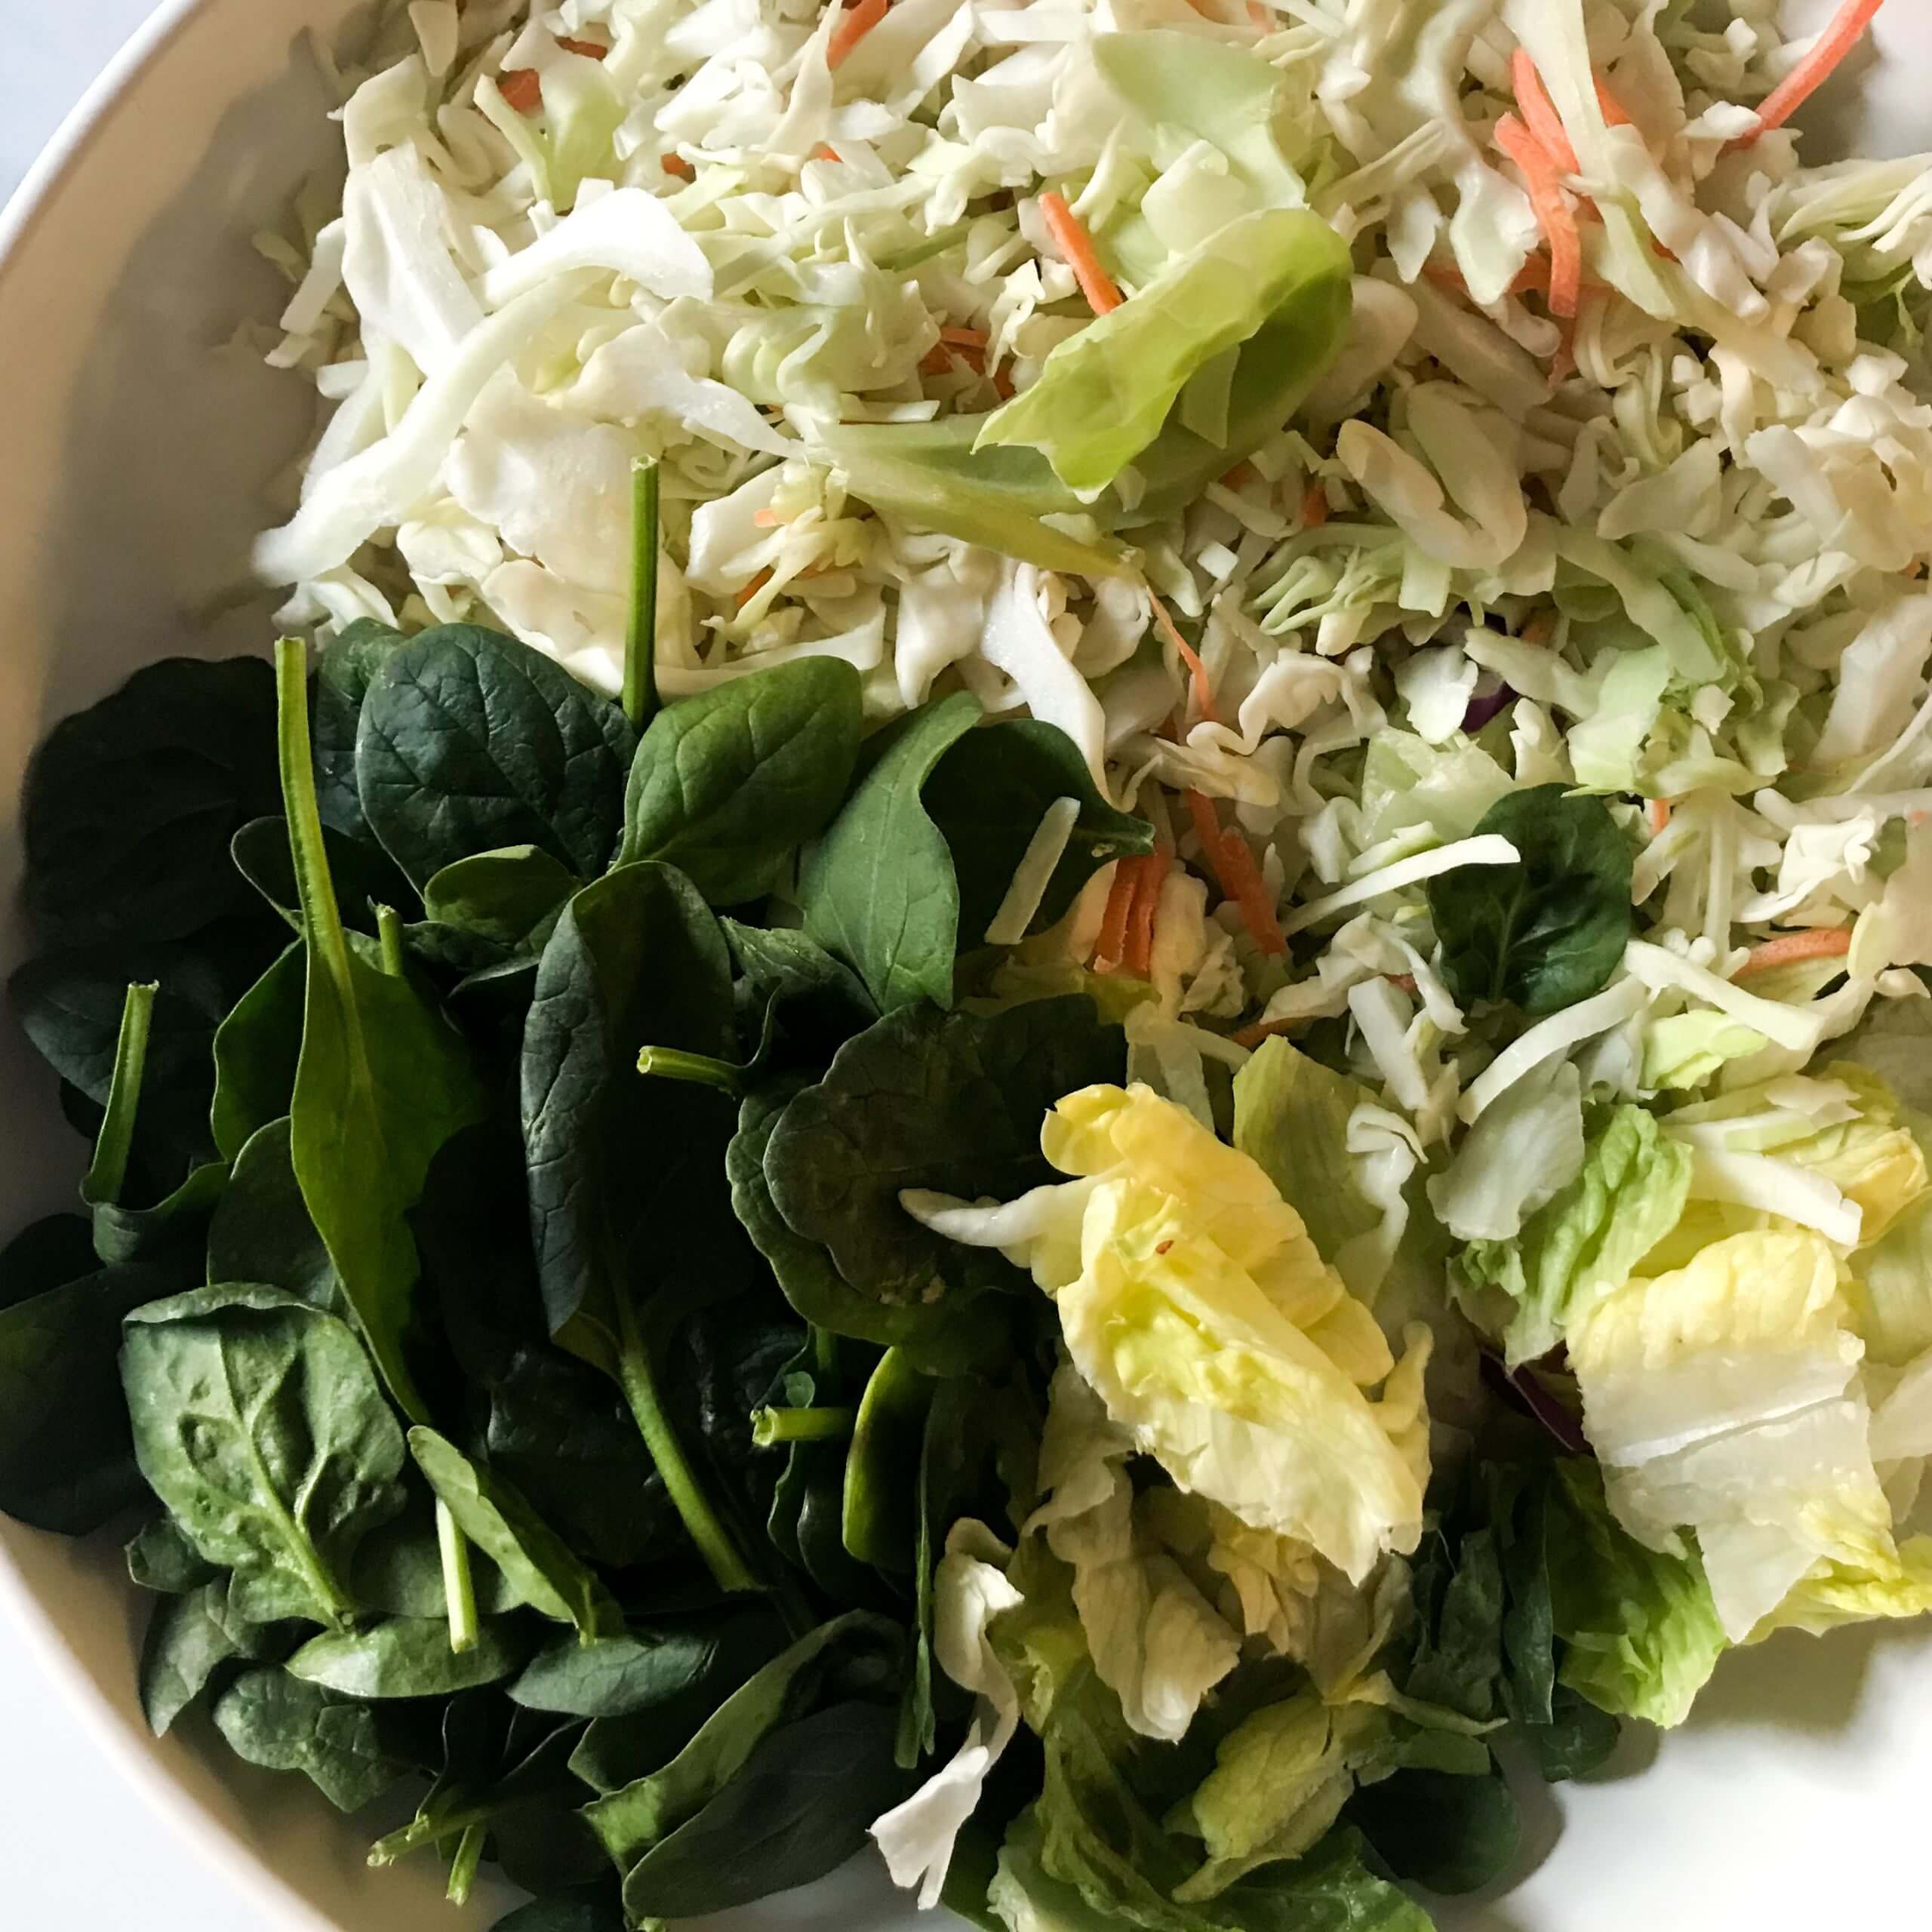 Kitchen Sink Salad | My Curated Tastes